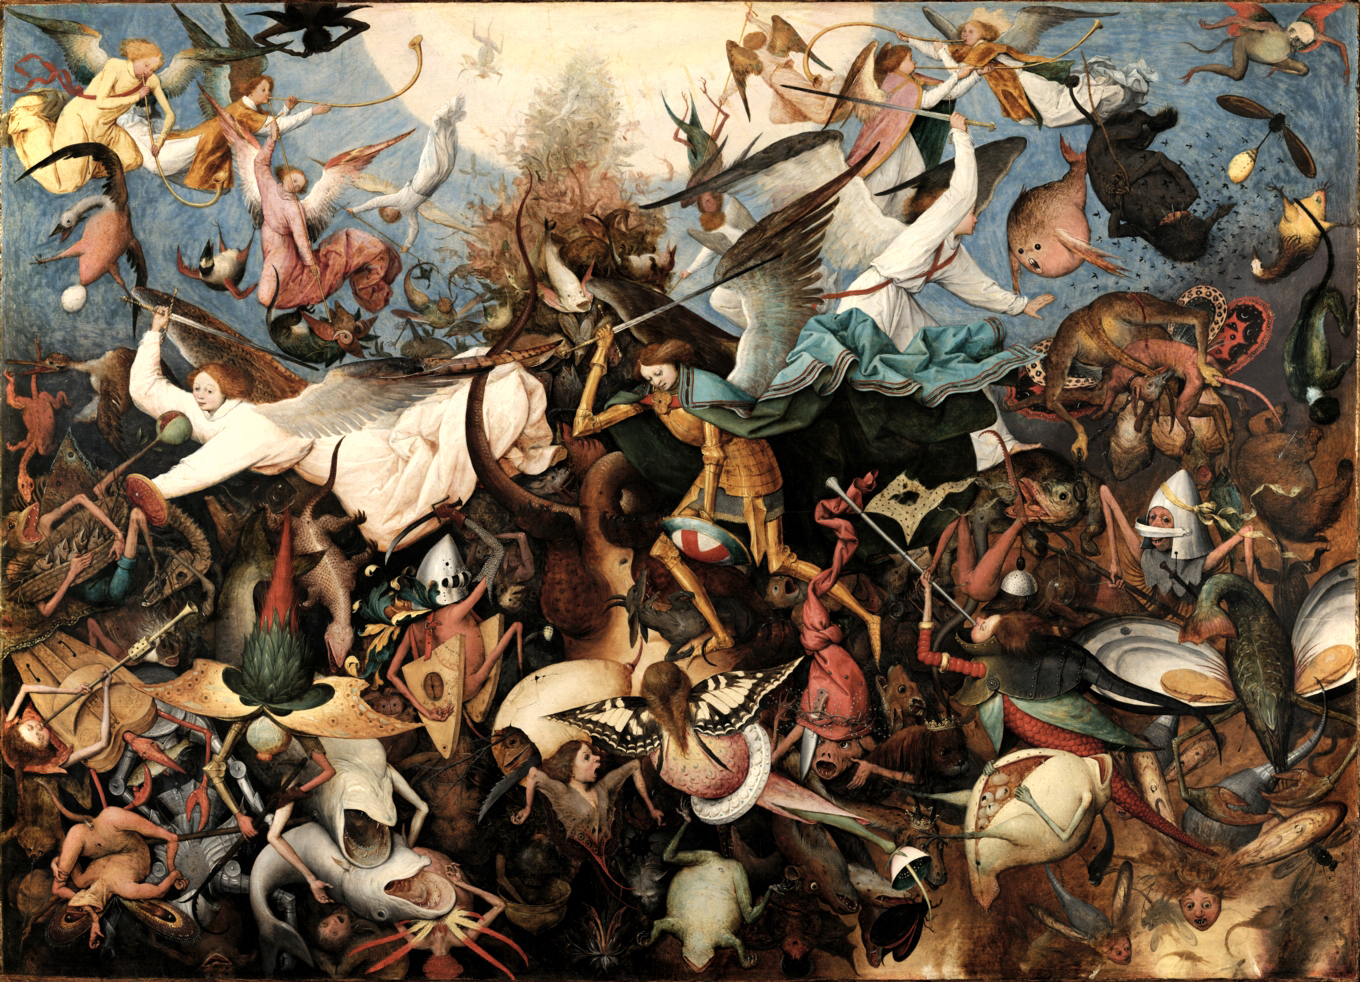 Pieter_Bruegel_the_Elder_-_The_Fall_of_the_Rebel_Angels_-_RMFAB_584_%28derivative_work%29.jpg